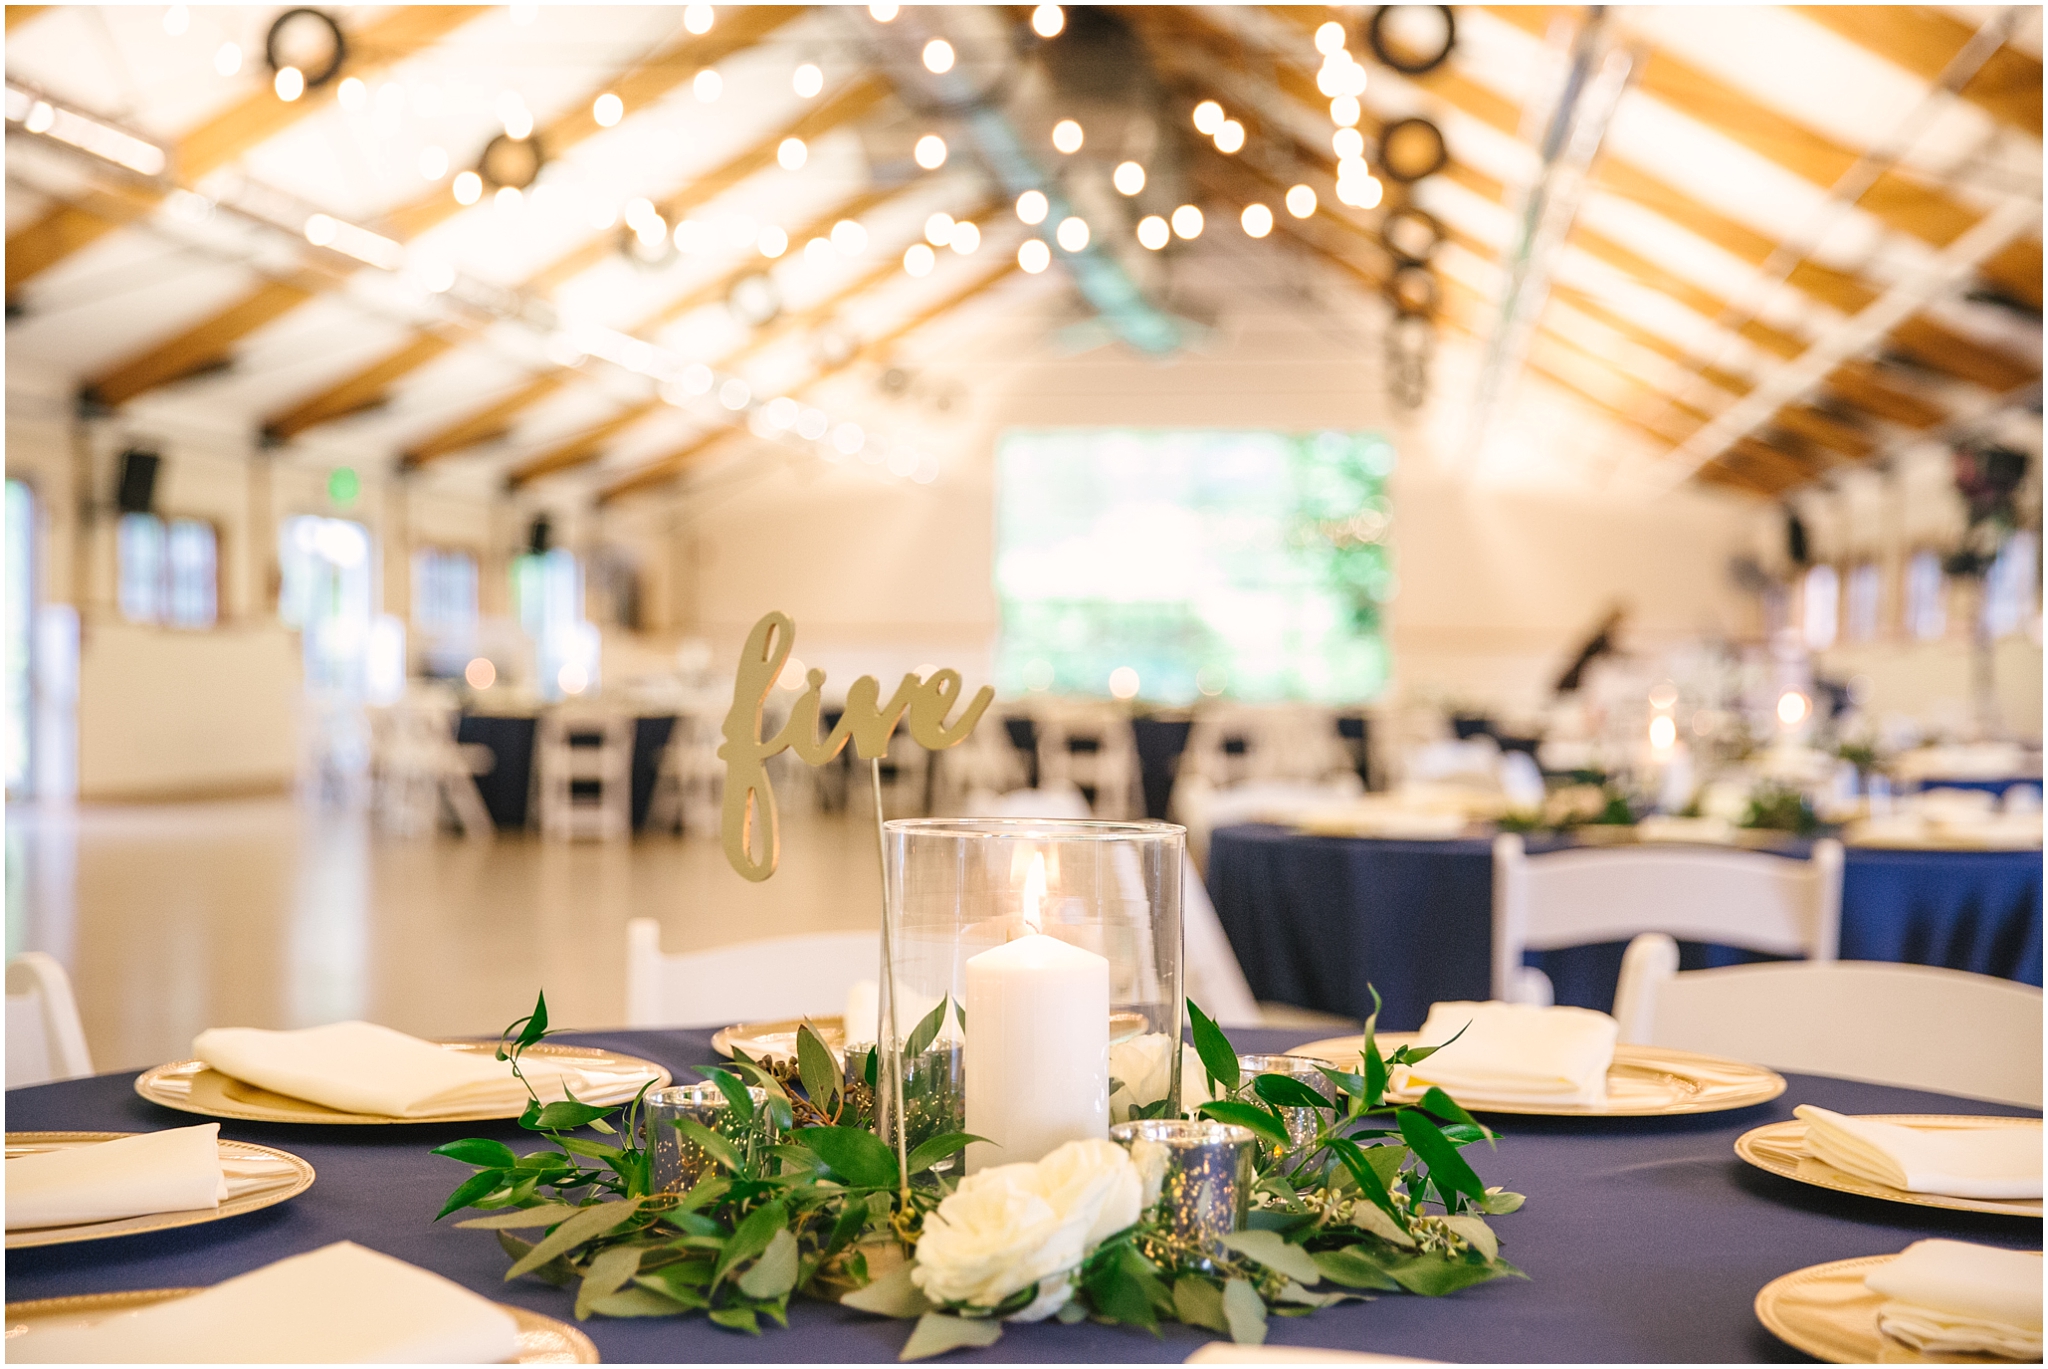 Pickering Barn wedding reception details in Issaquah Washington